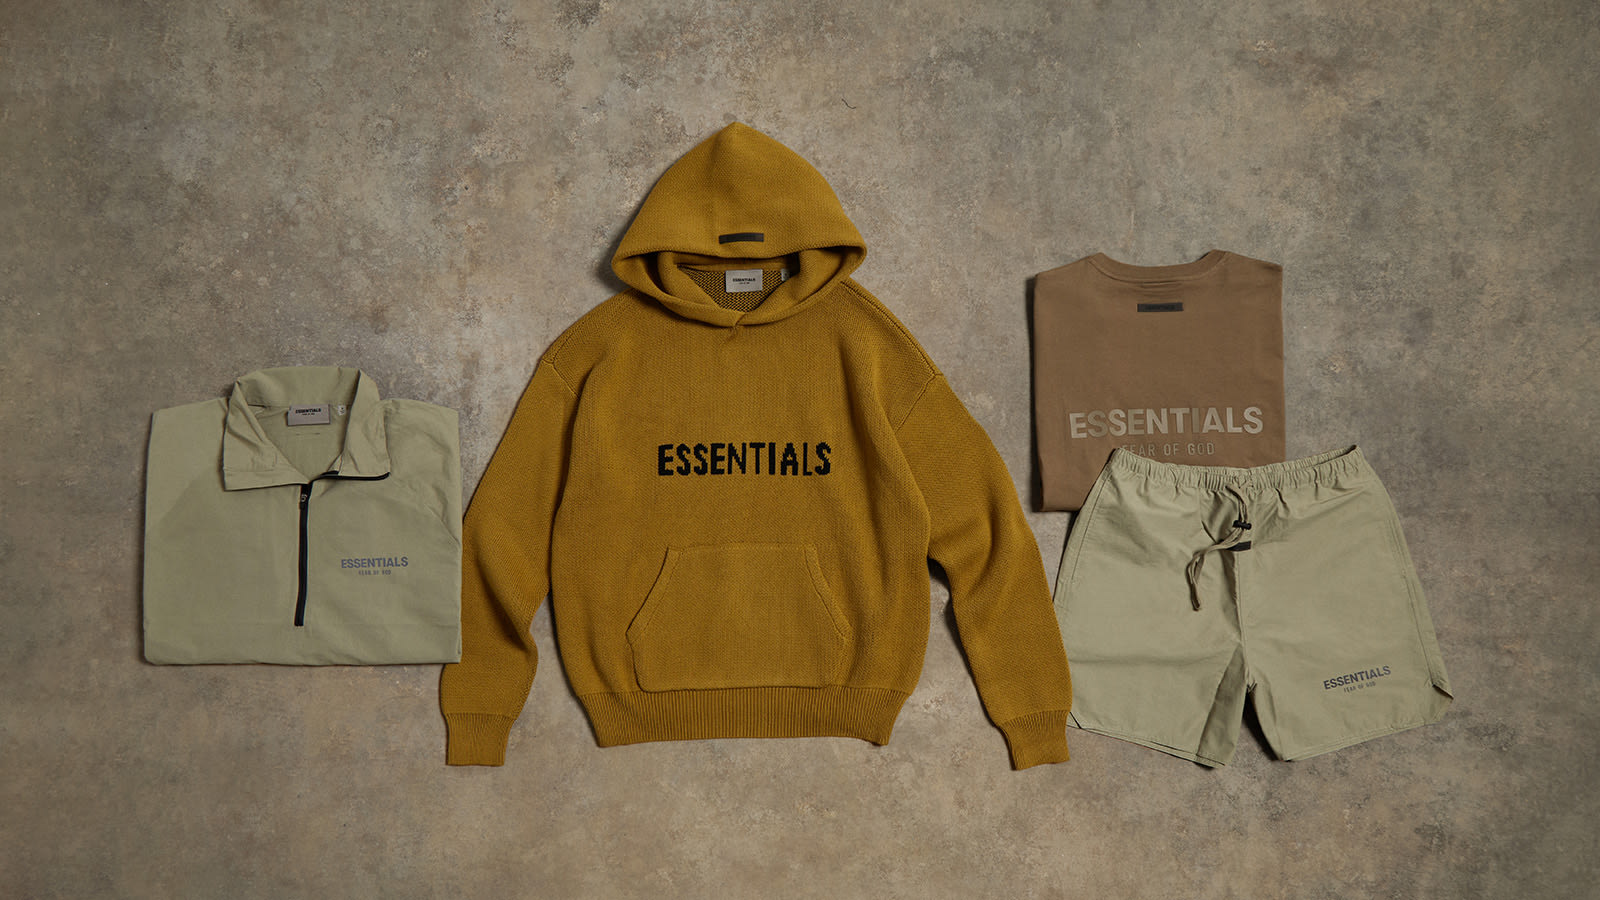 Essentials clothing brand. Original and authentic clothing